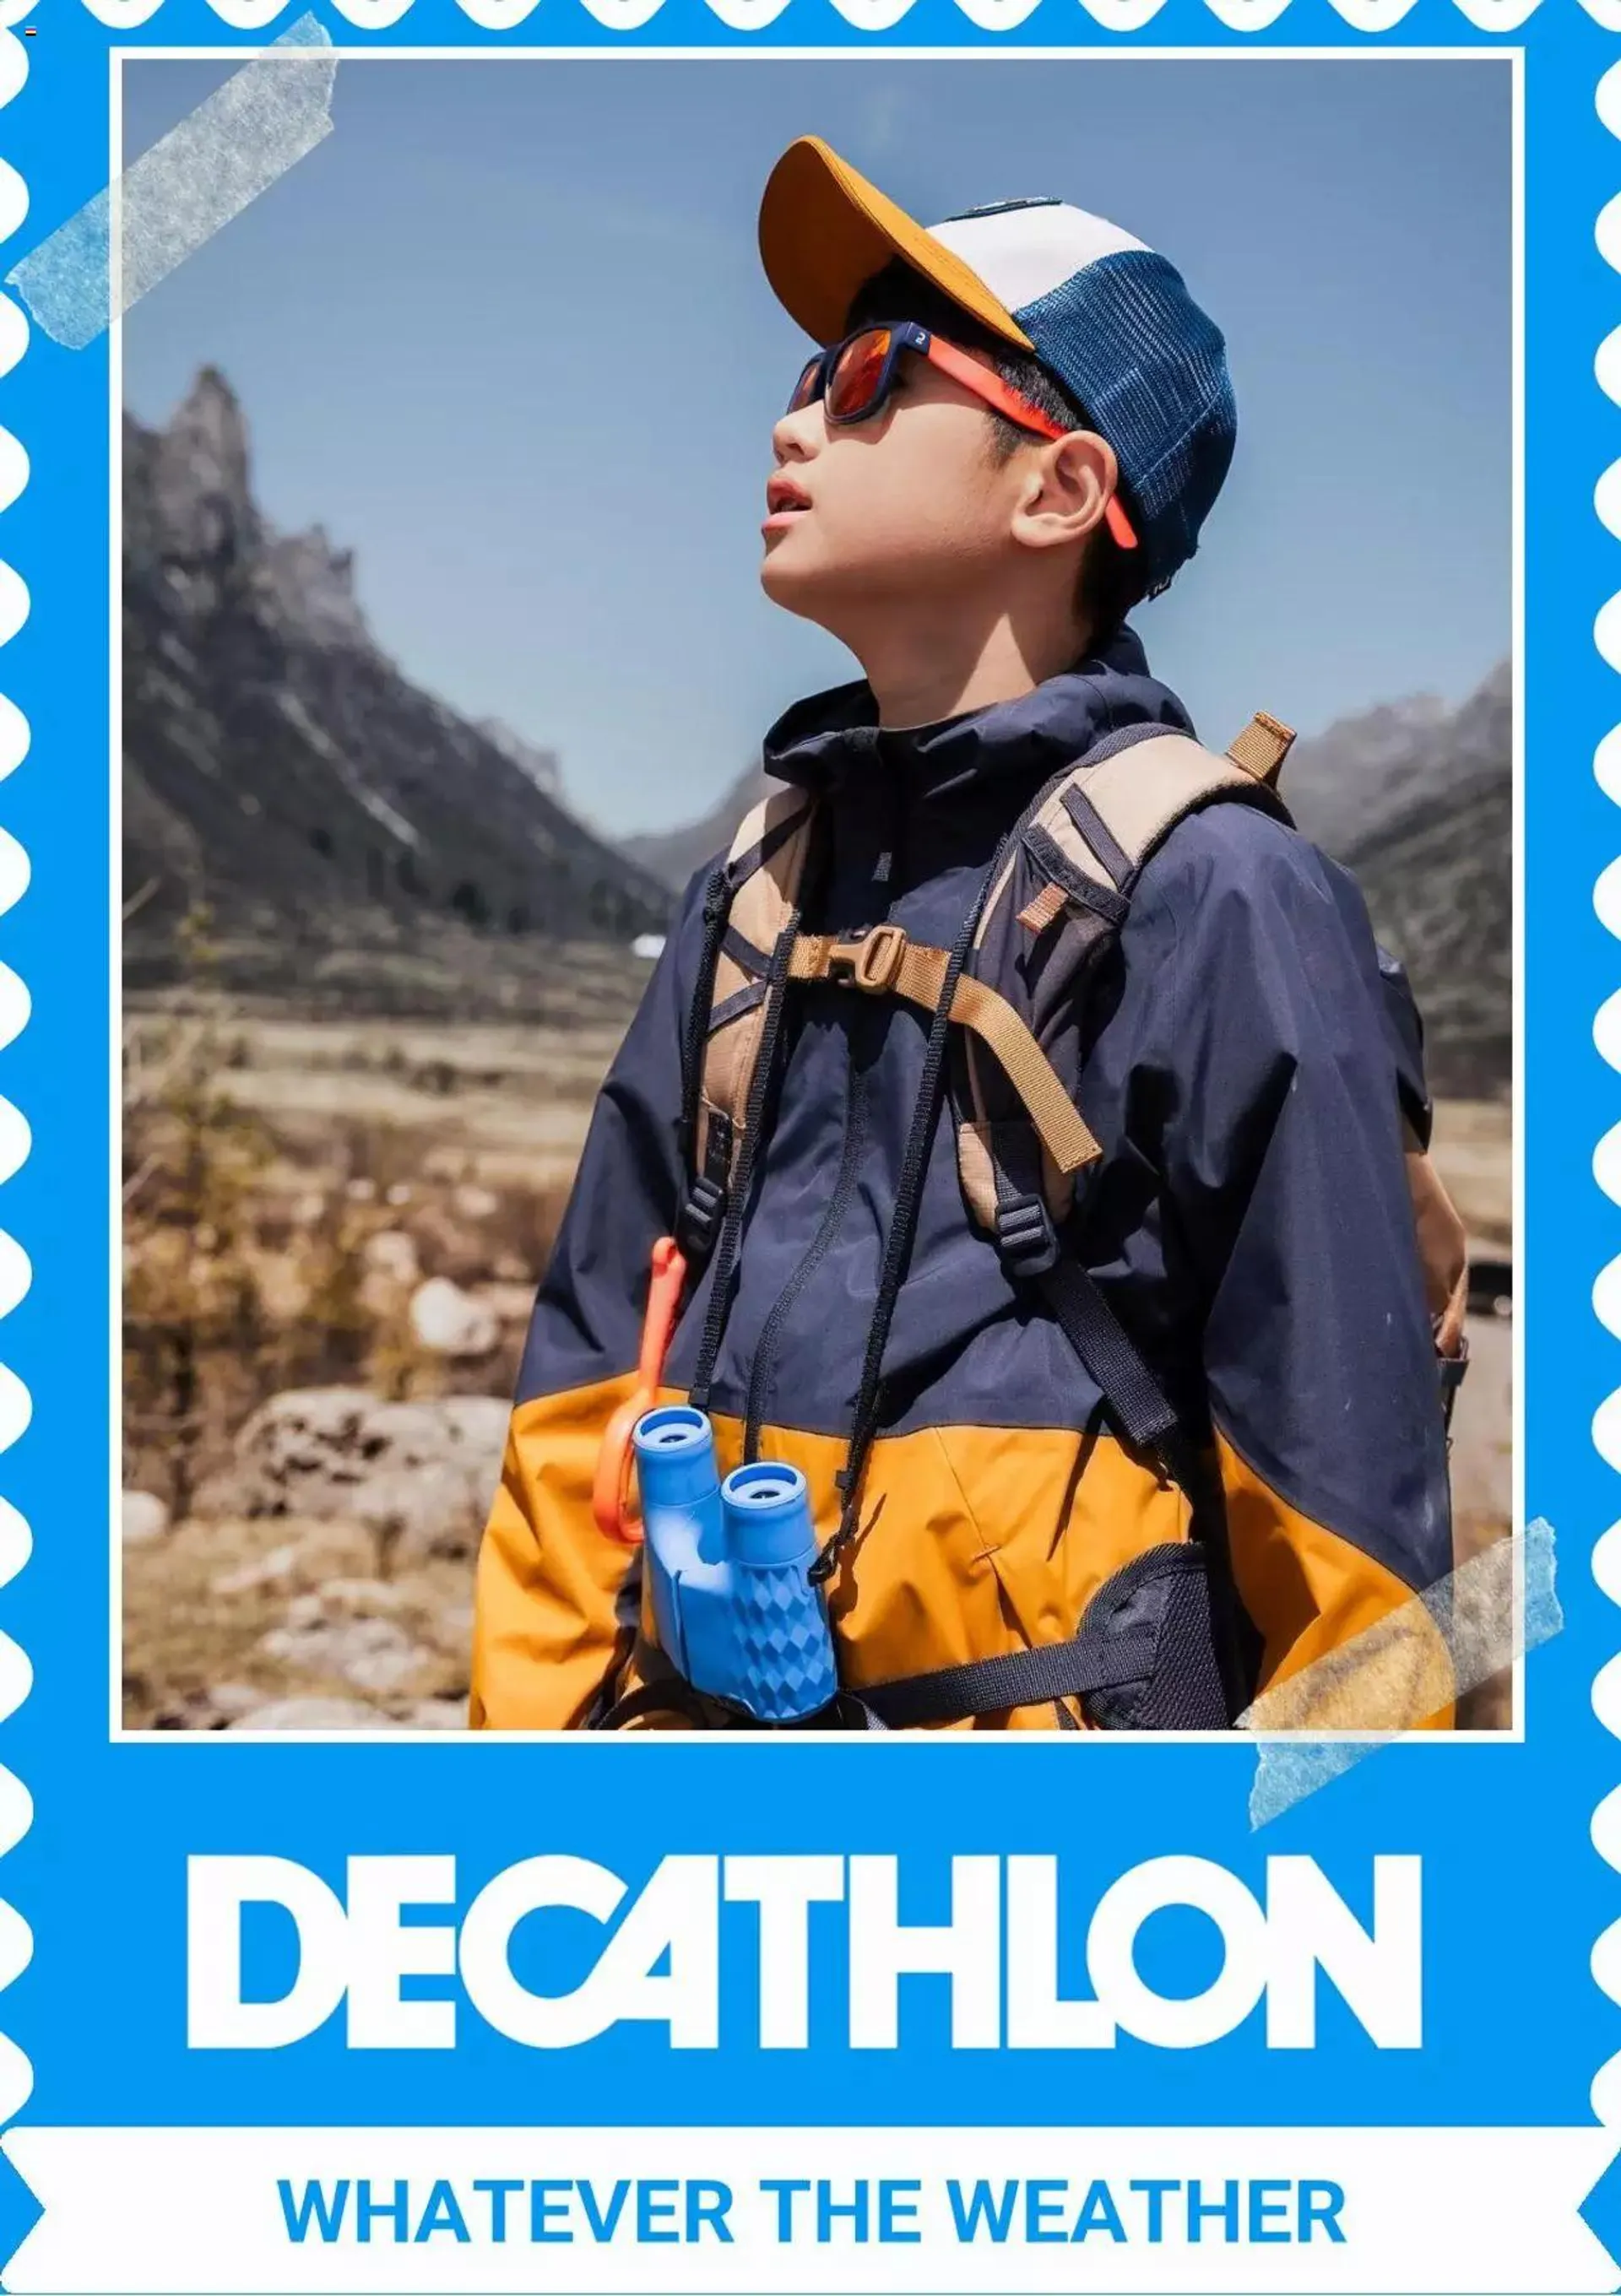 Decathlon offers